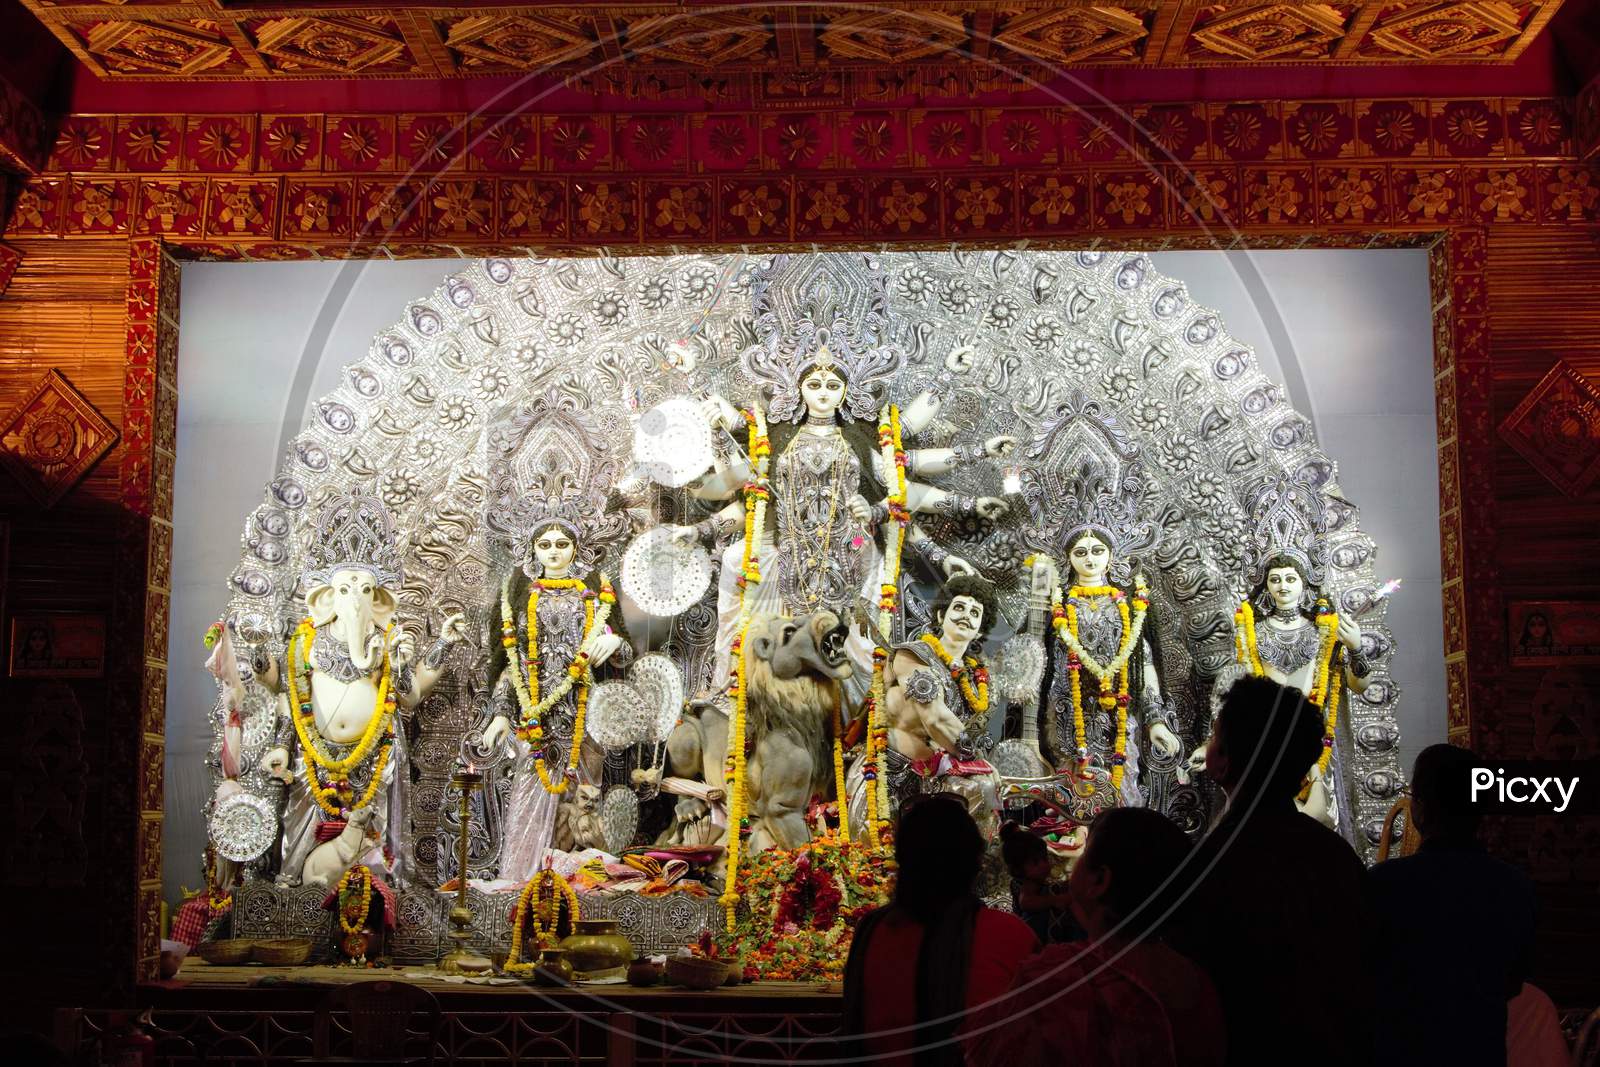 Celebration of Durga Puja